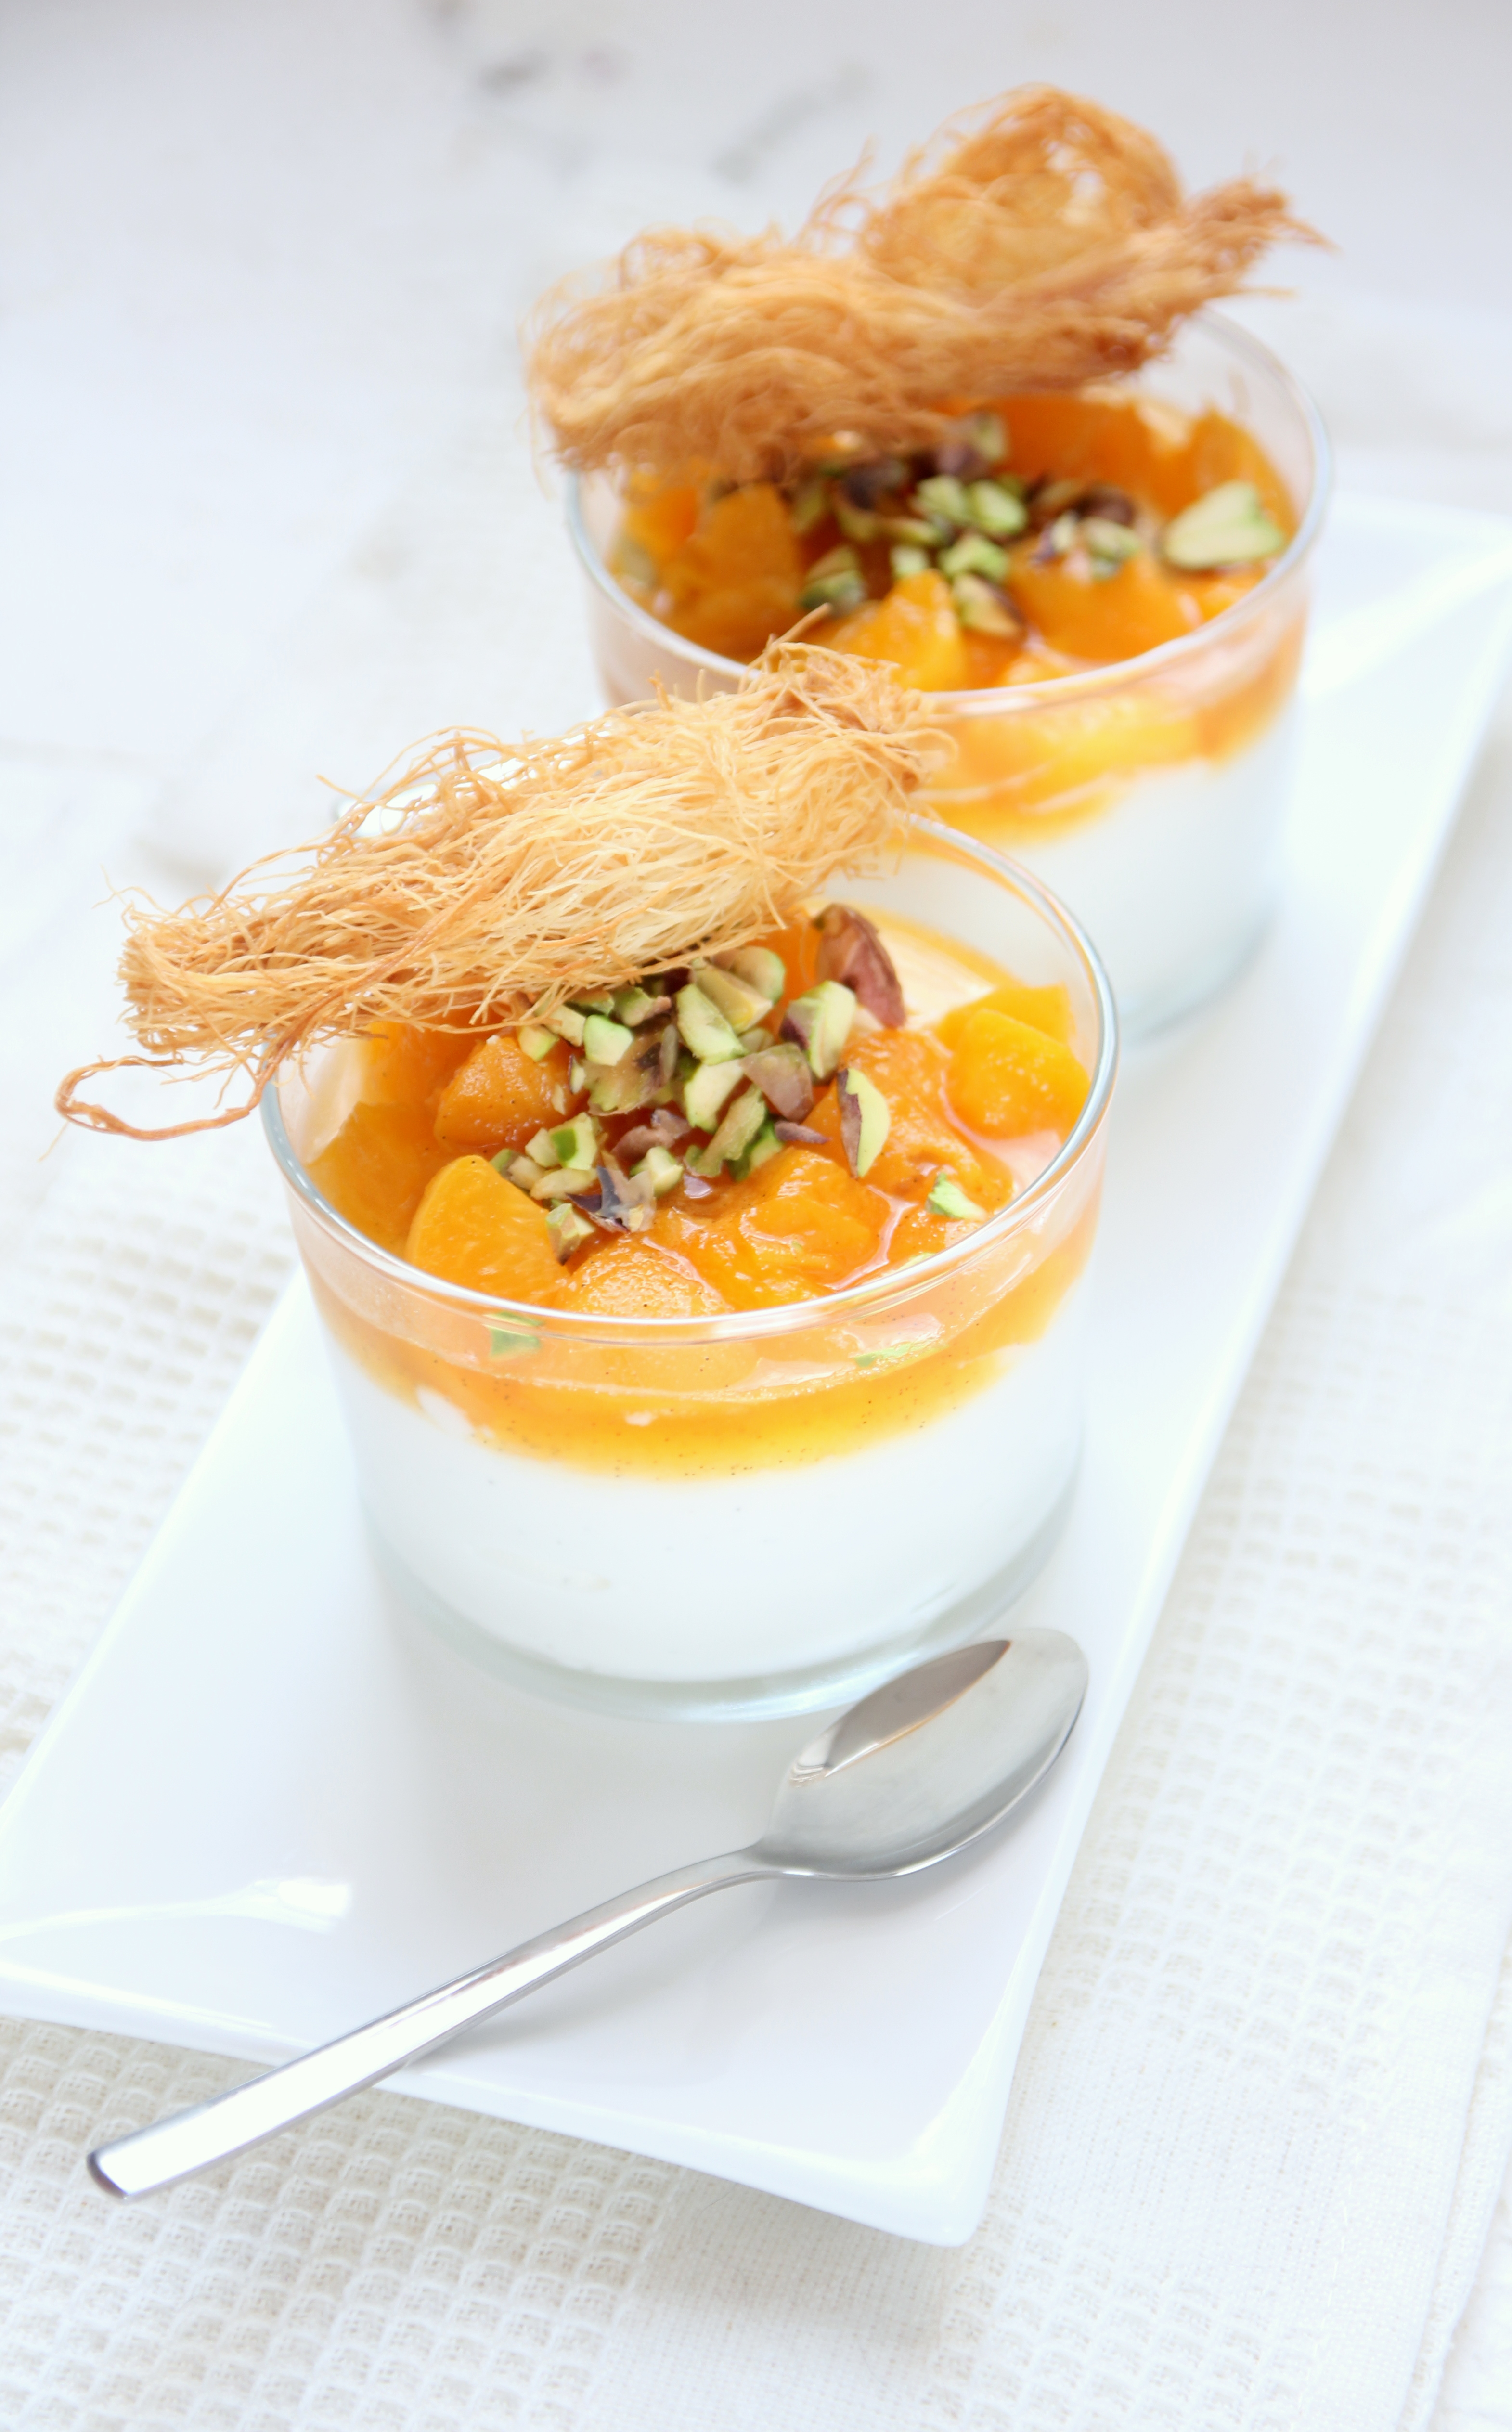 Apricot Dessert Cups with Yogurt Cream, Pistachios and Kadaif